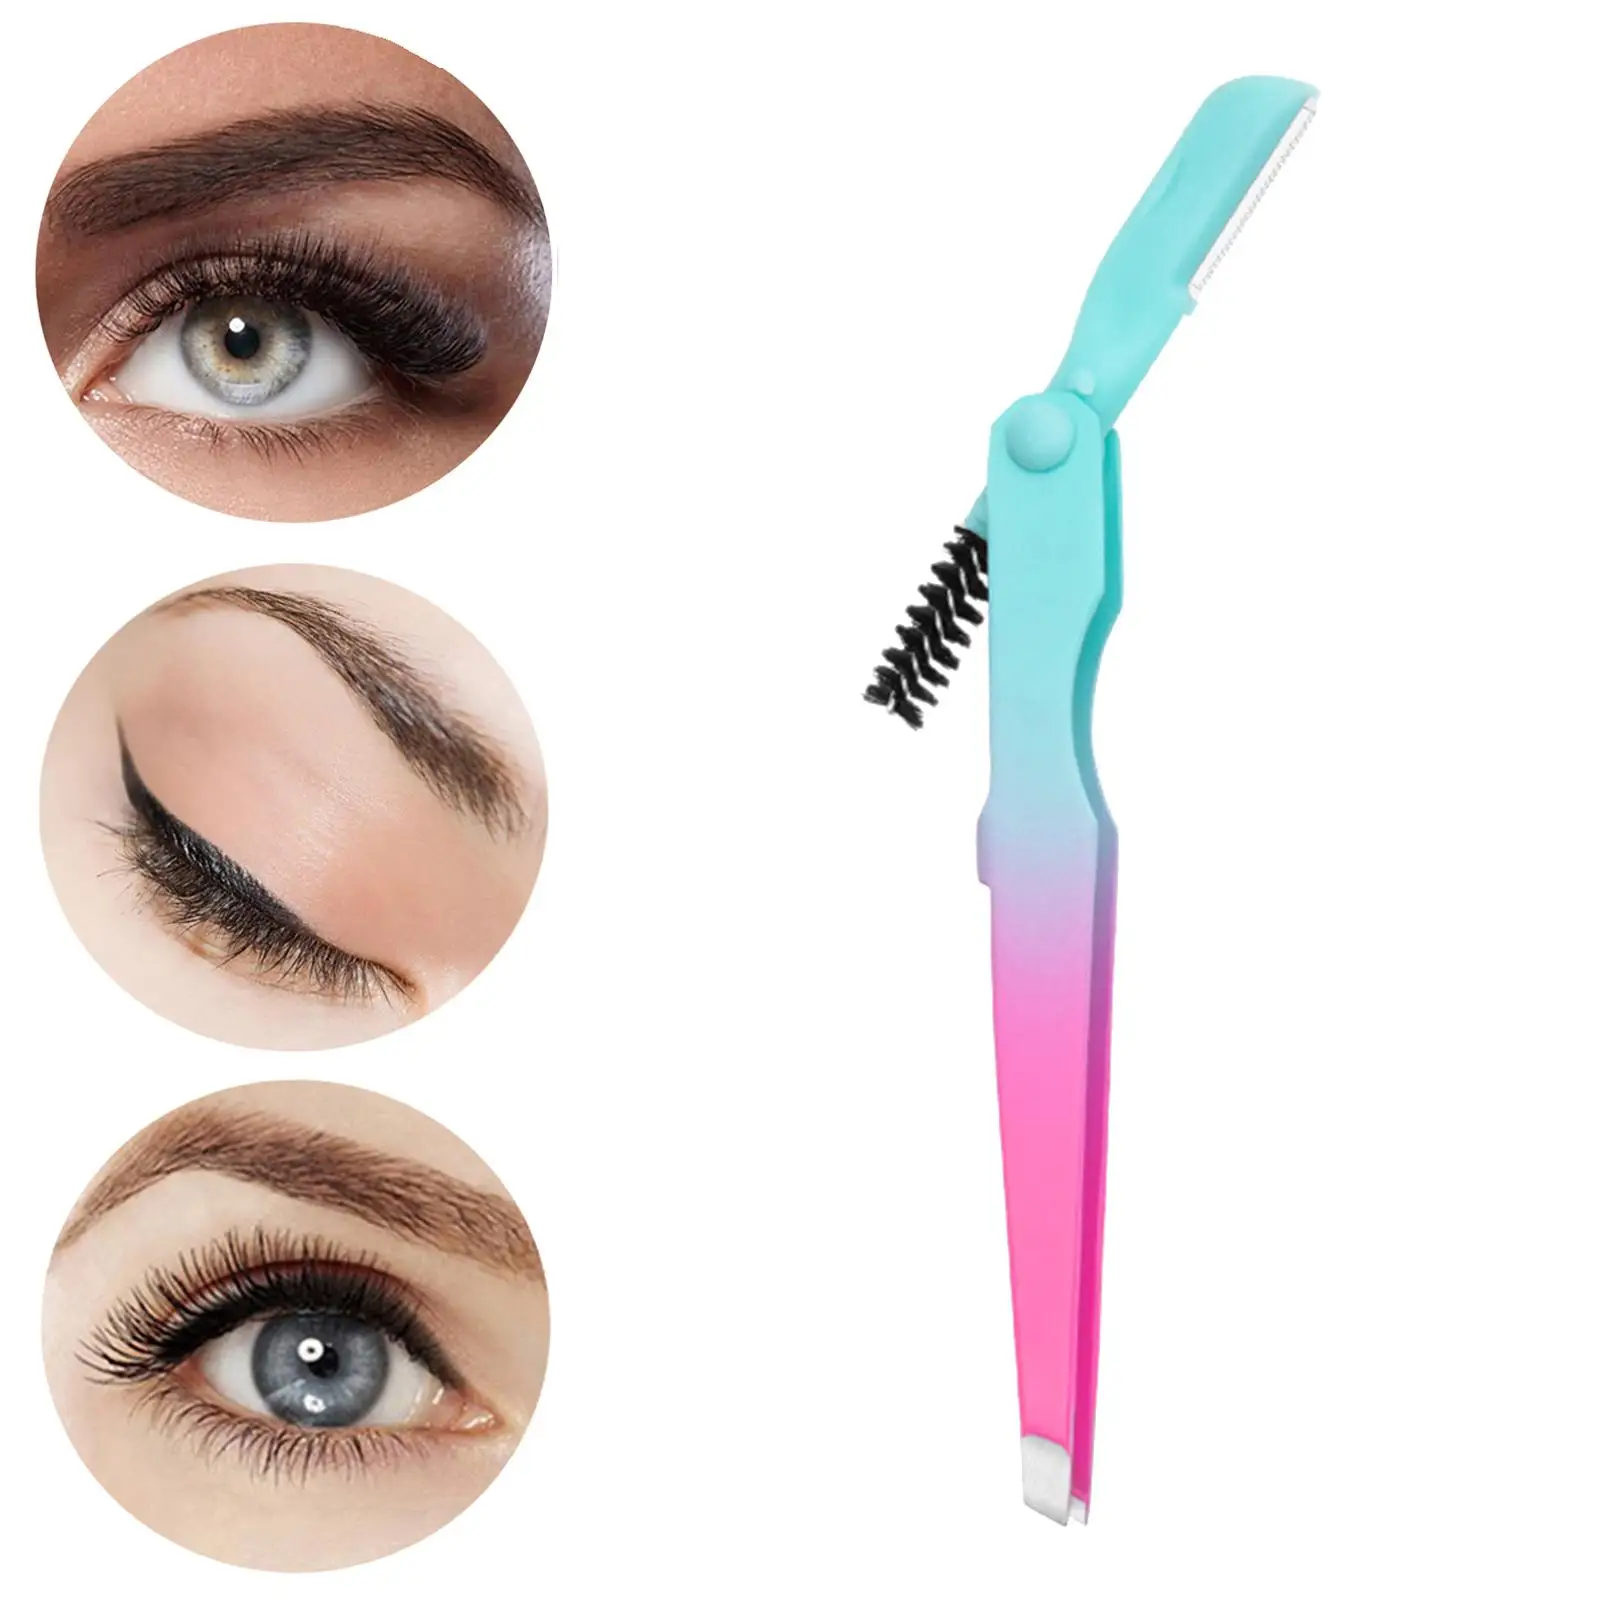 Eyebrow Tweezers Tool Multipurpose Comfortable Hair Remover 3 in 1